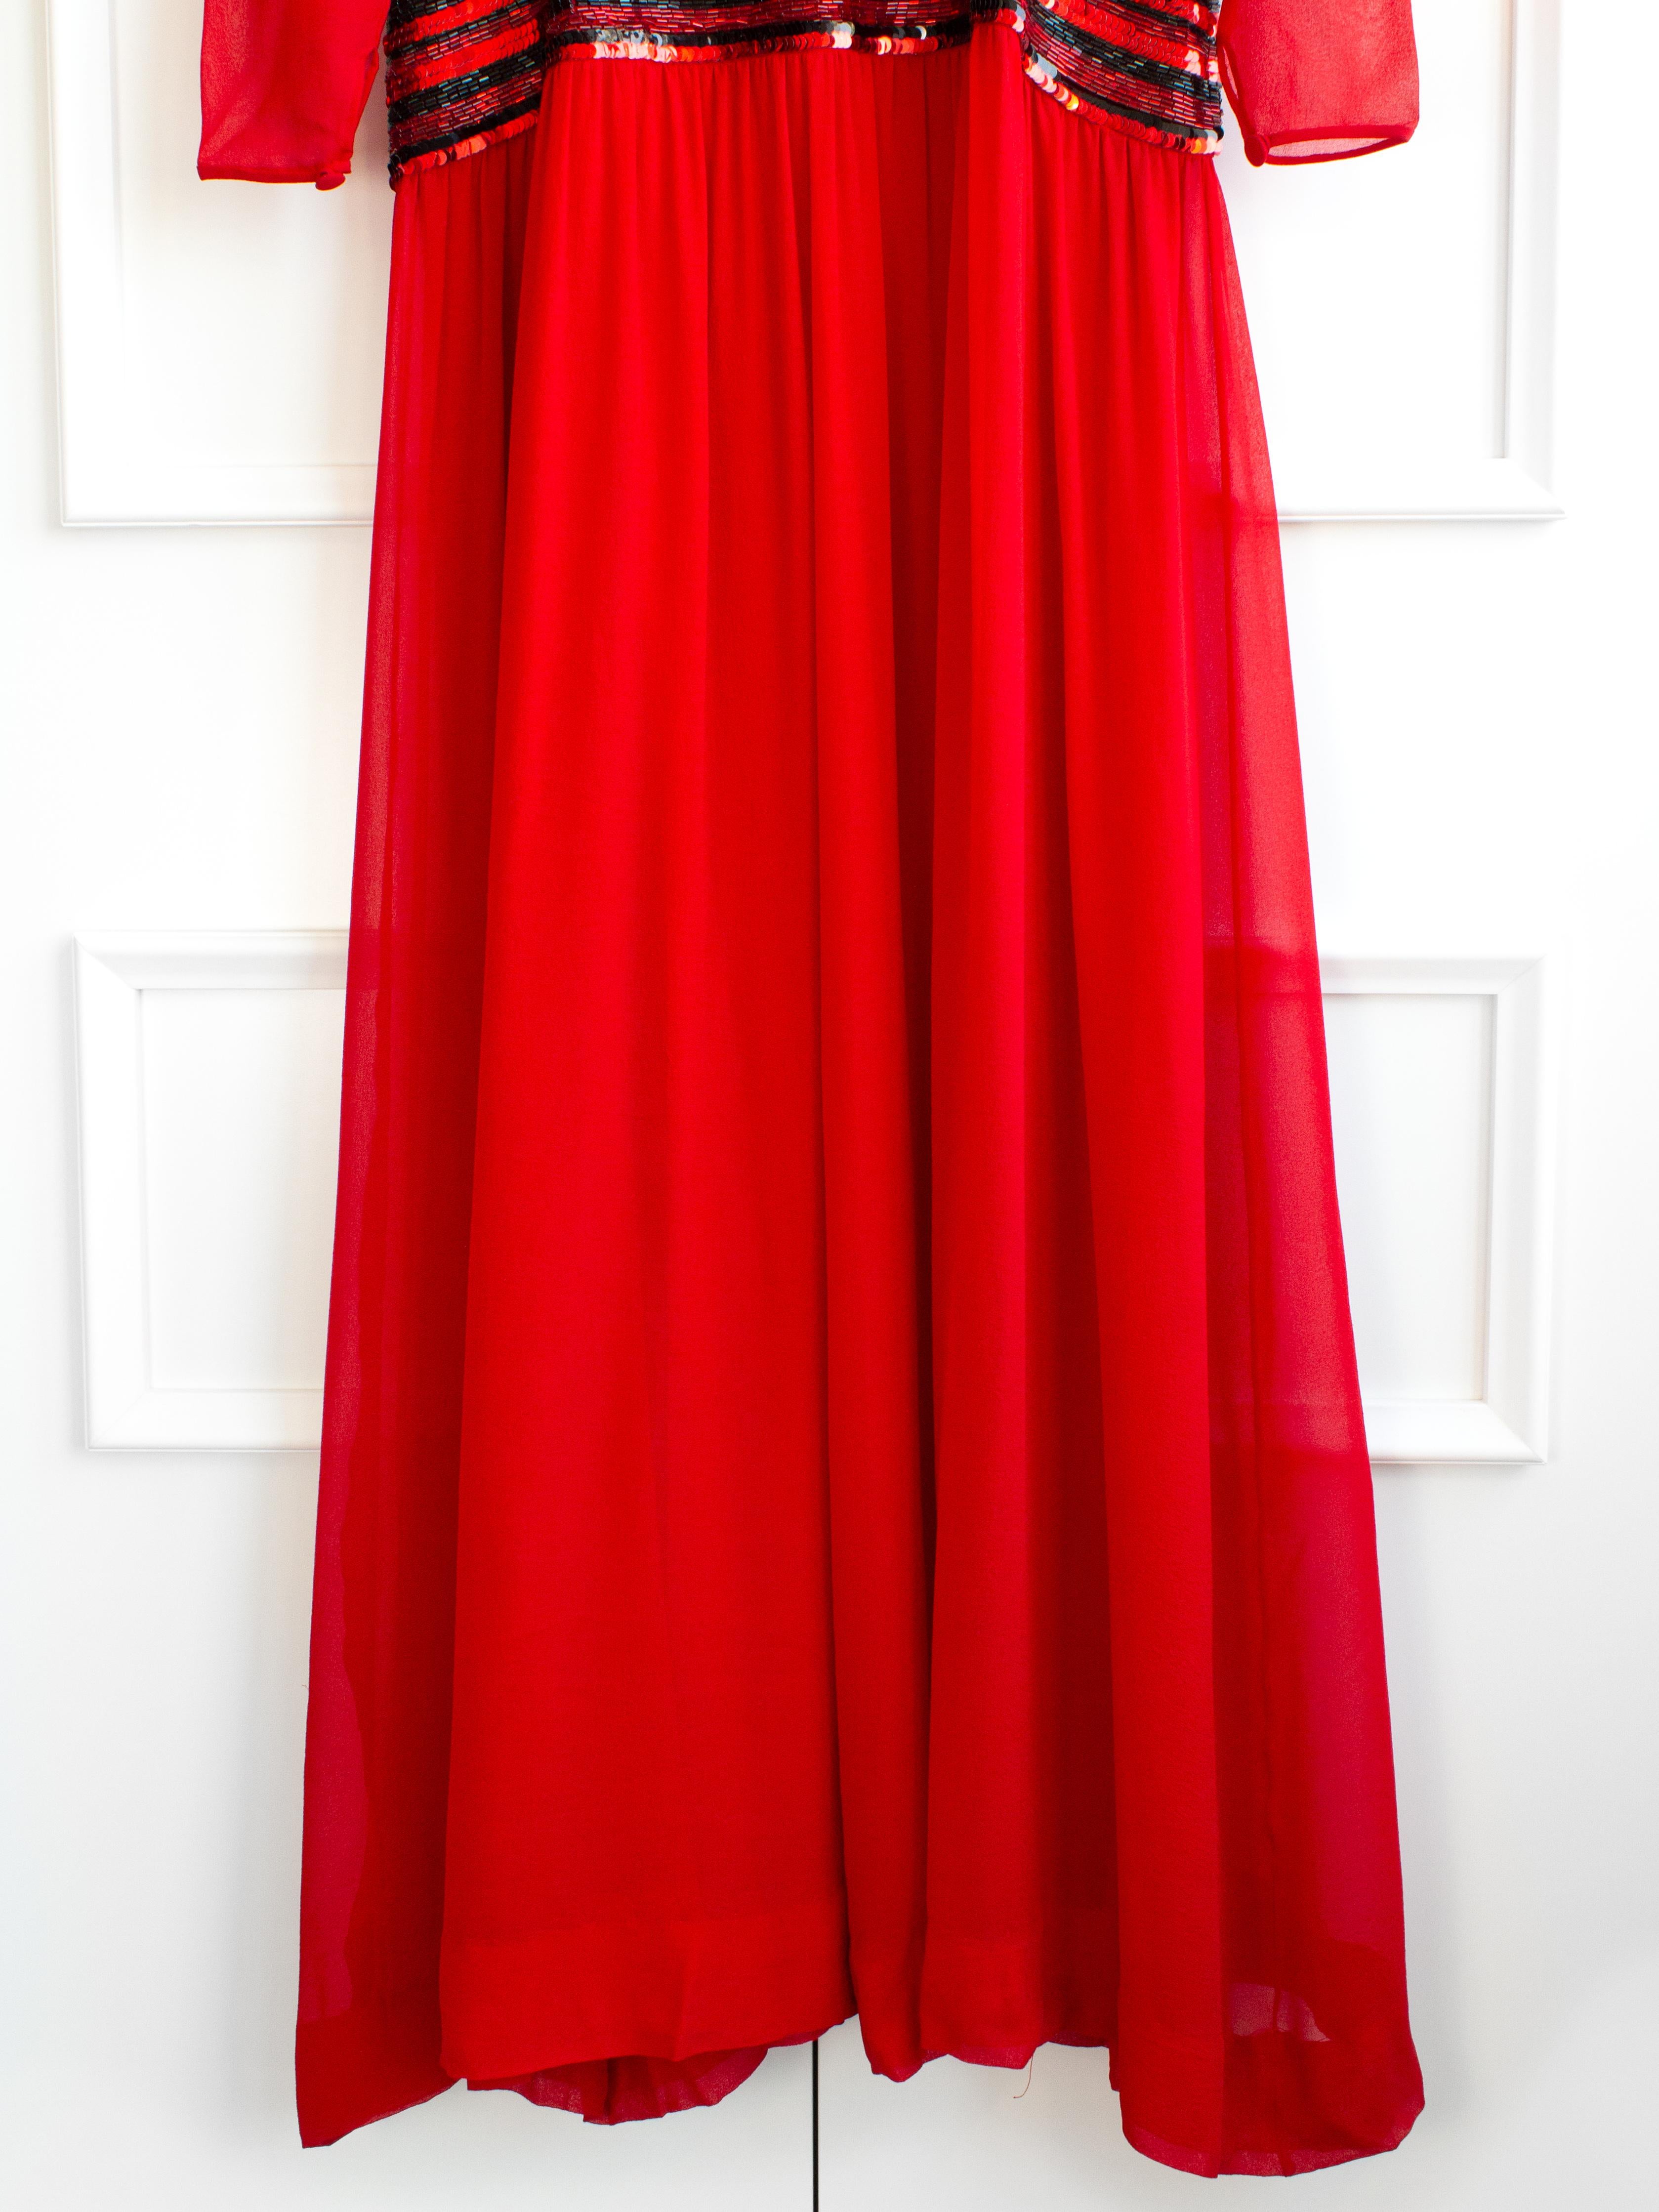 Chanel Vintage F/W 1983 Red Black Sequin Embellished Evening Dress Gown 5